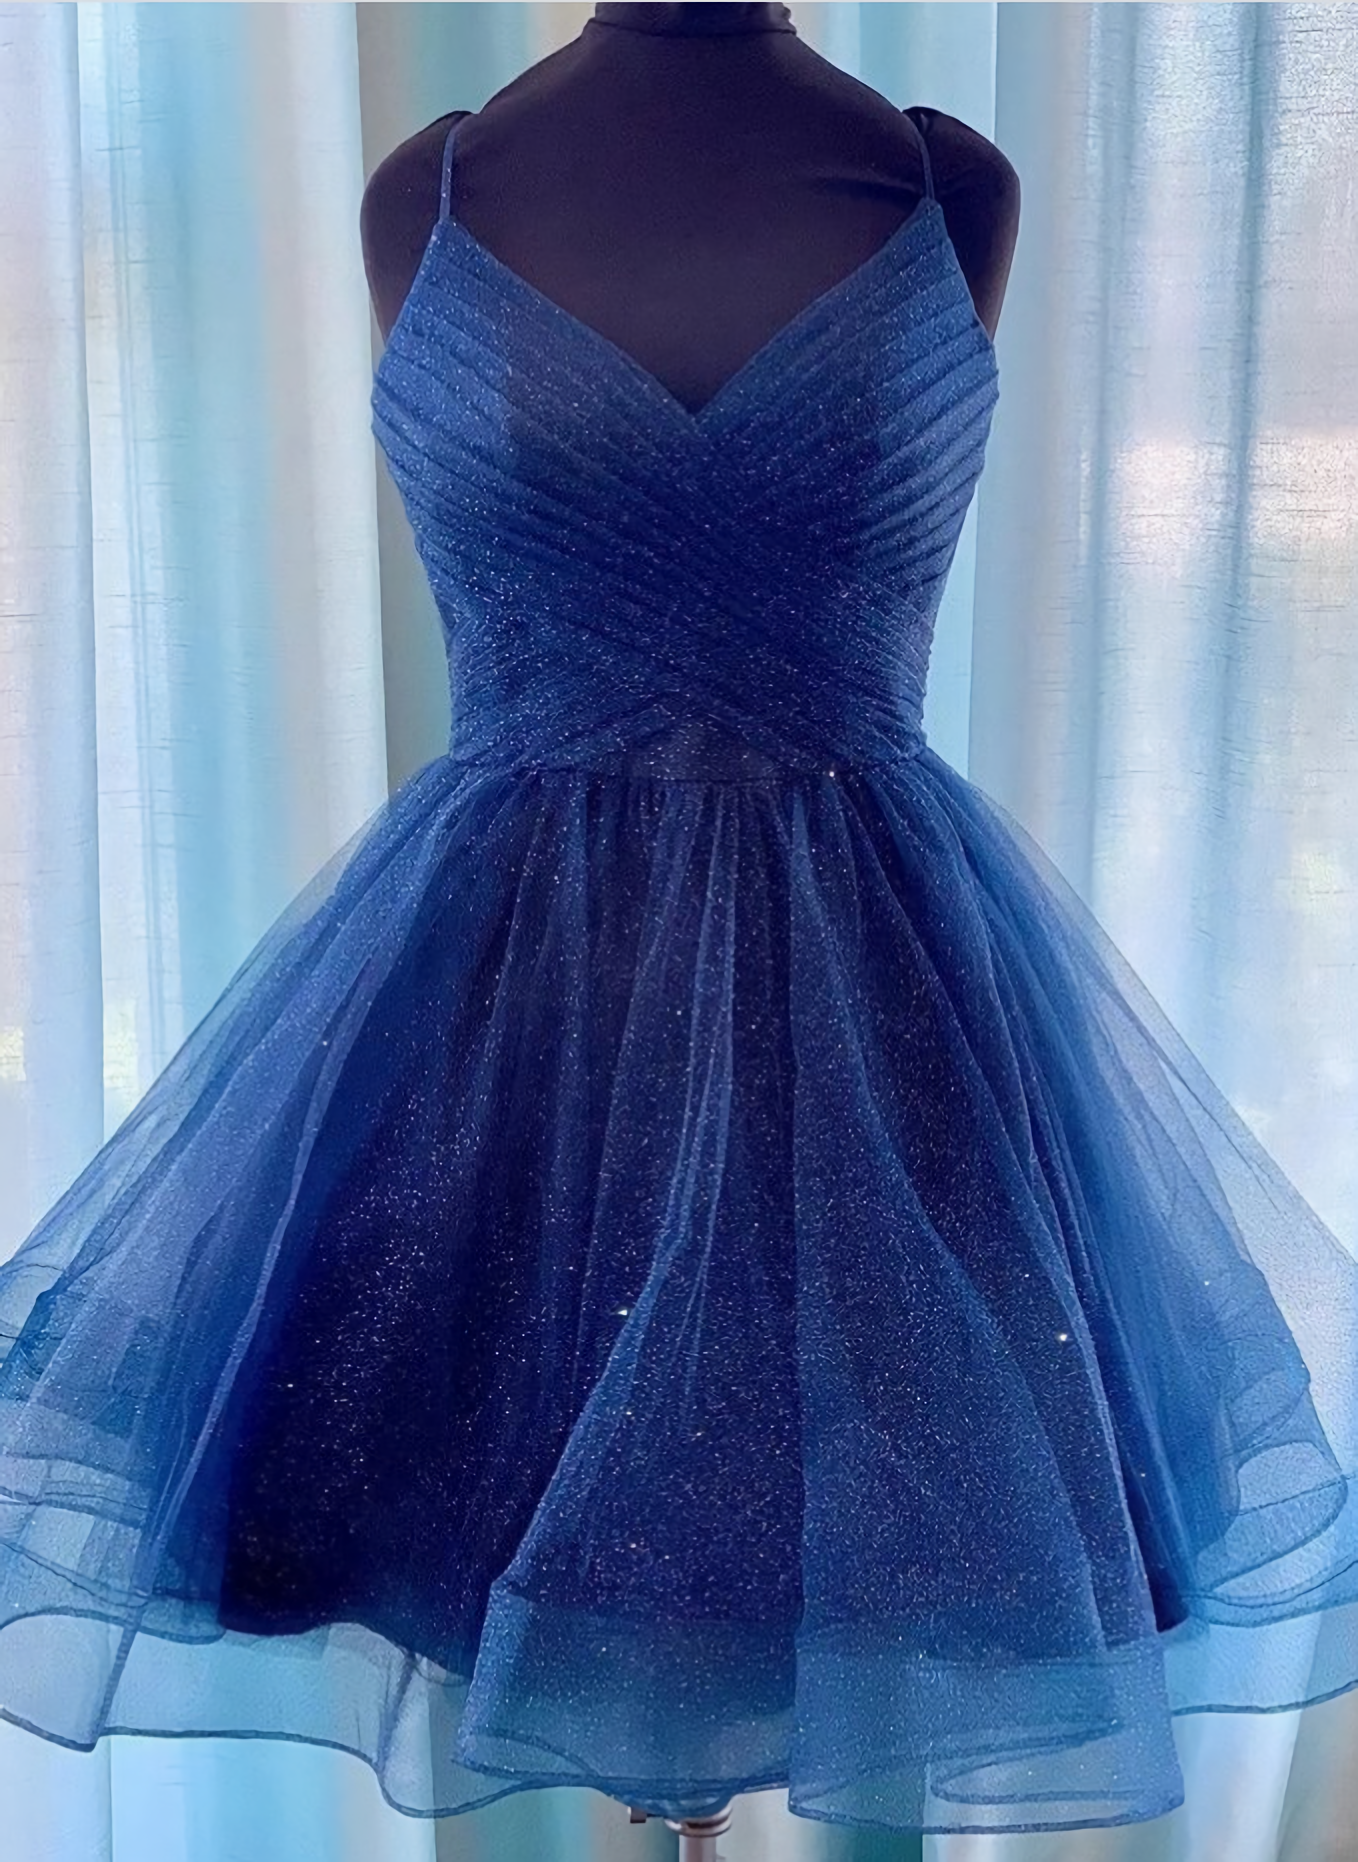 Lace Dress, Sparkly Navy Blue V-neck Short Homecoming Dresses